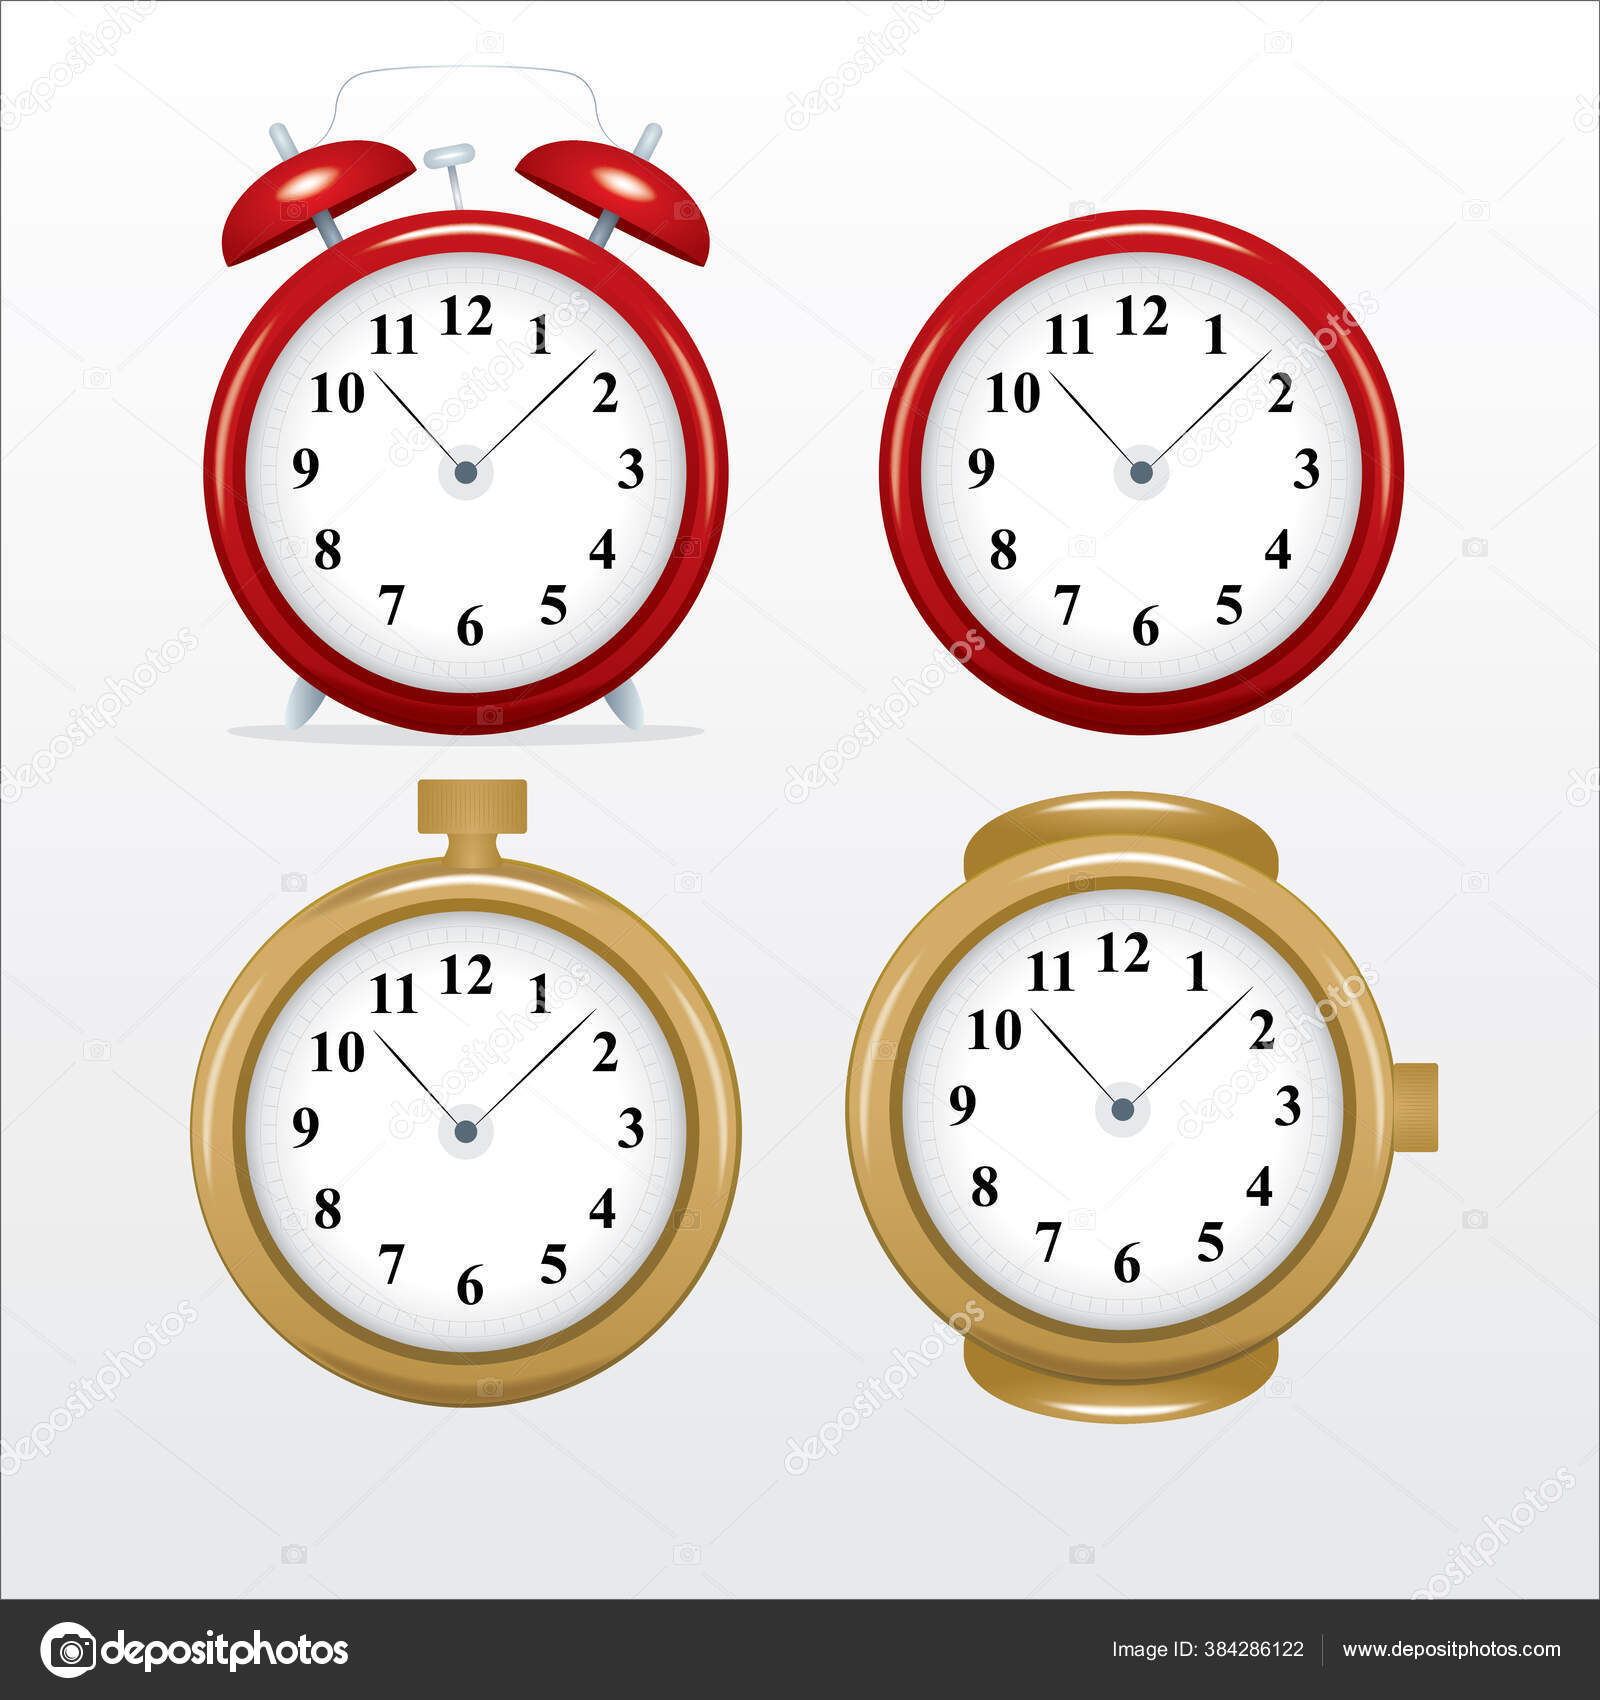 Iconos de tiempo realista reloj temporizador cronómetro reloj de